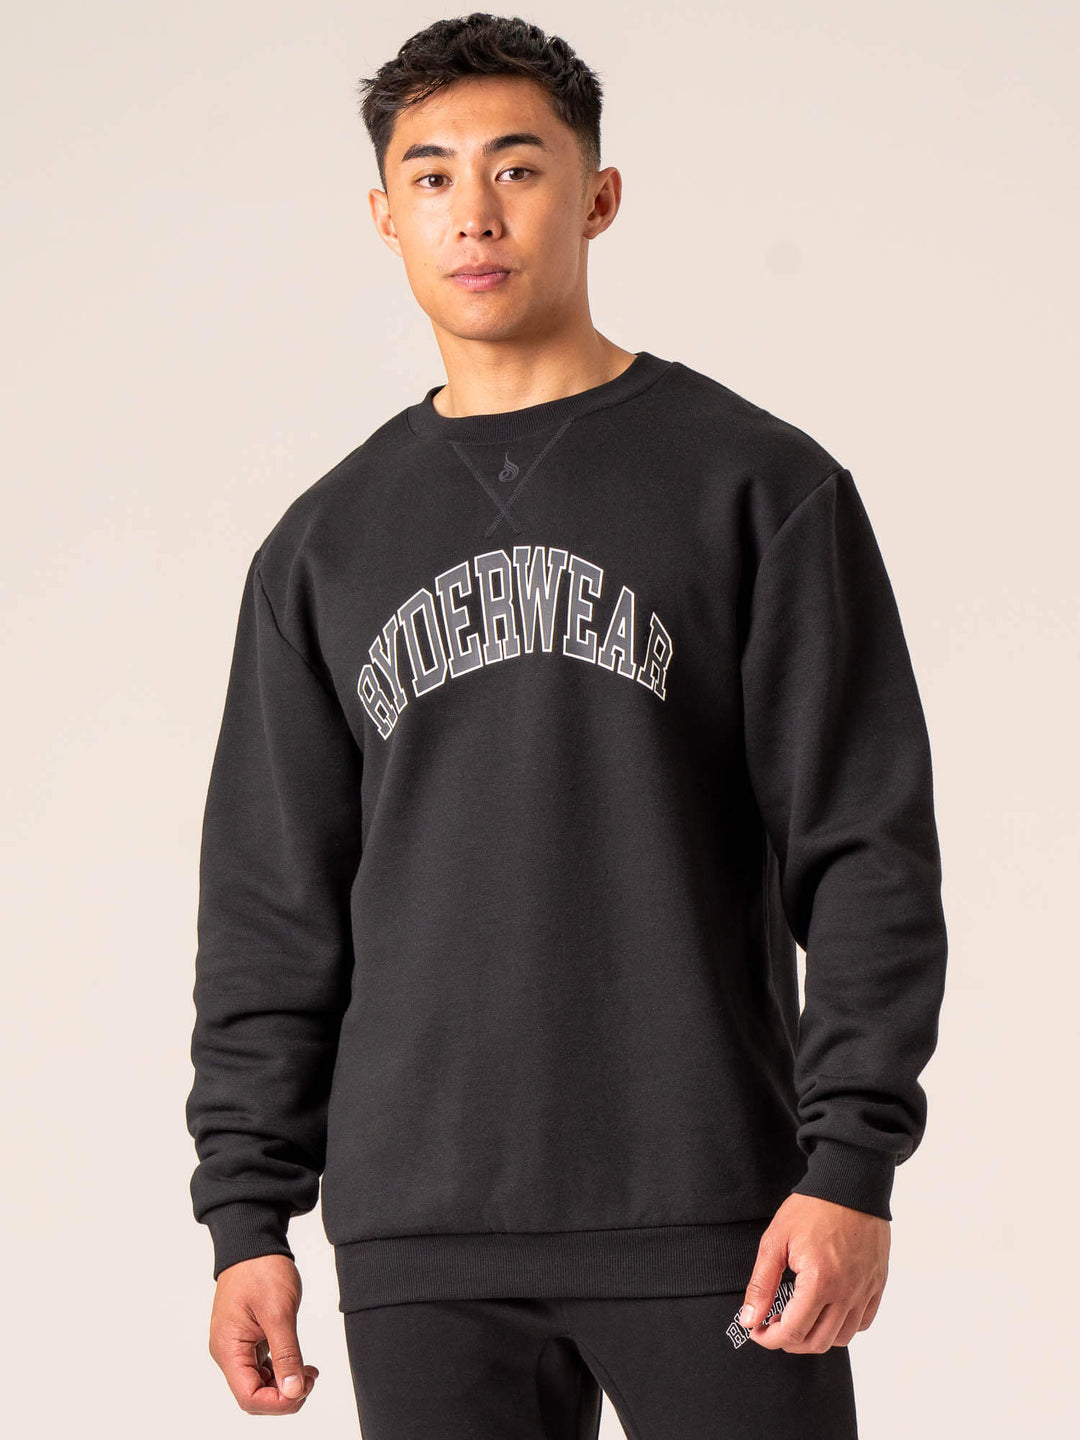 Men's Collegiate Crew Neck - Black Clothing Ryderwear 